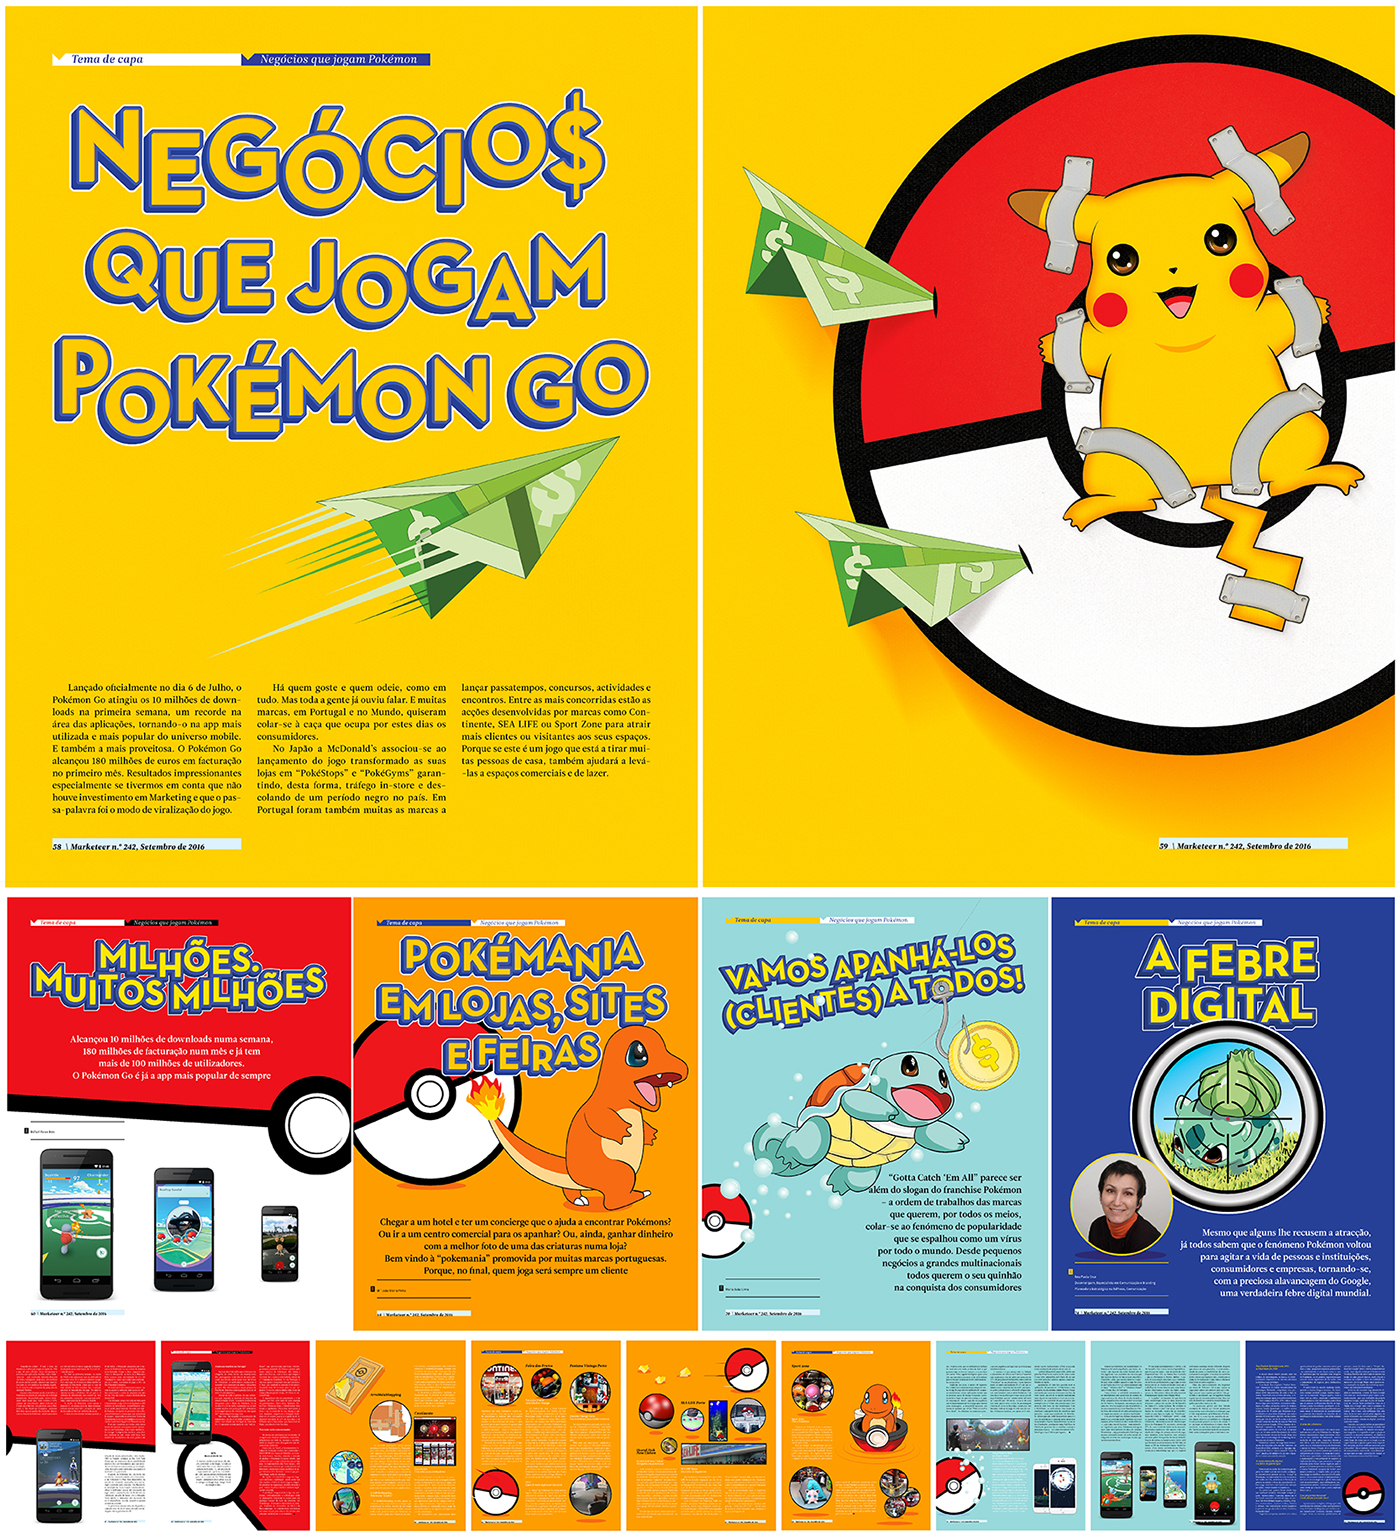 #pikachu #illustration #Charmander #bulbasaur #Squirtle #portuguese #illustrator #portugal #marketing #pokemongo